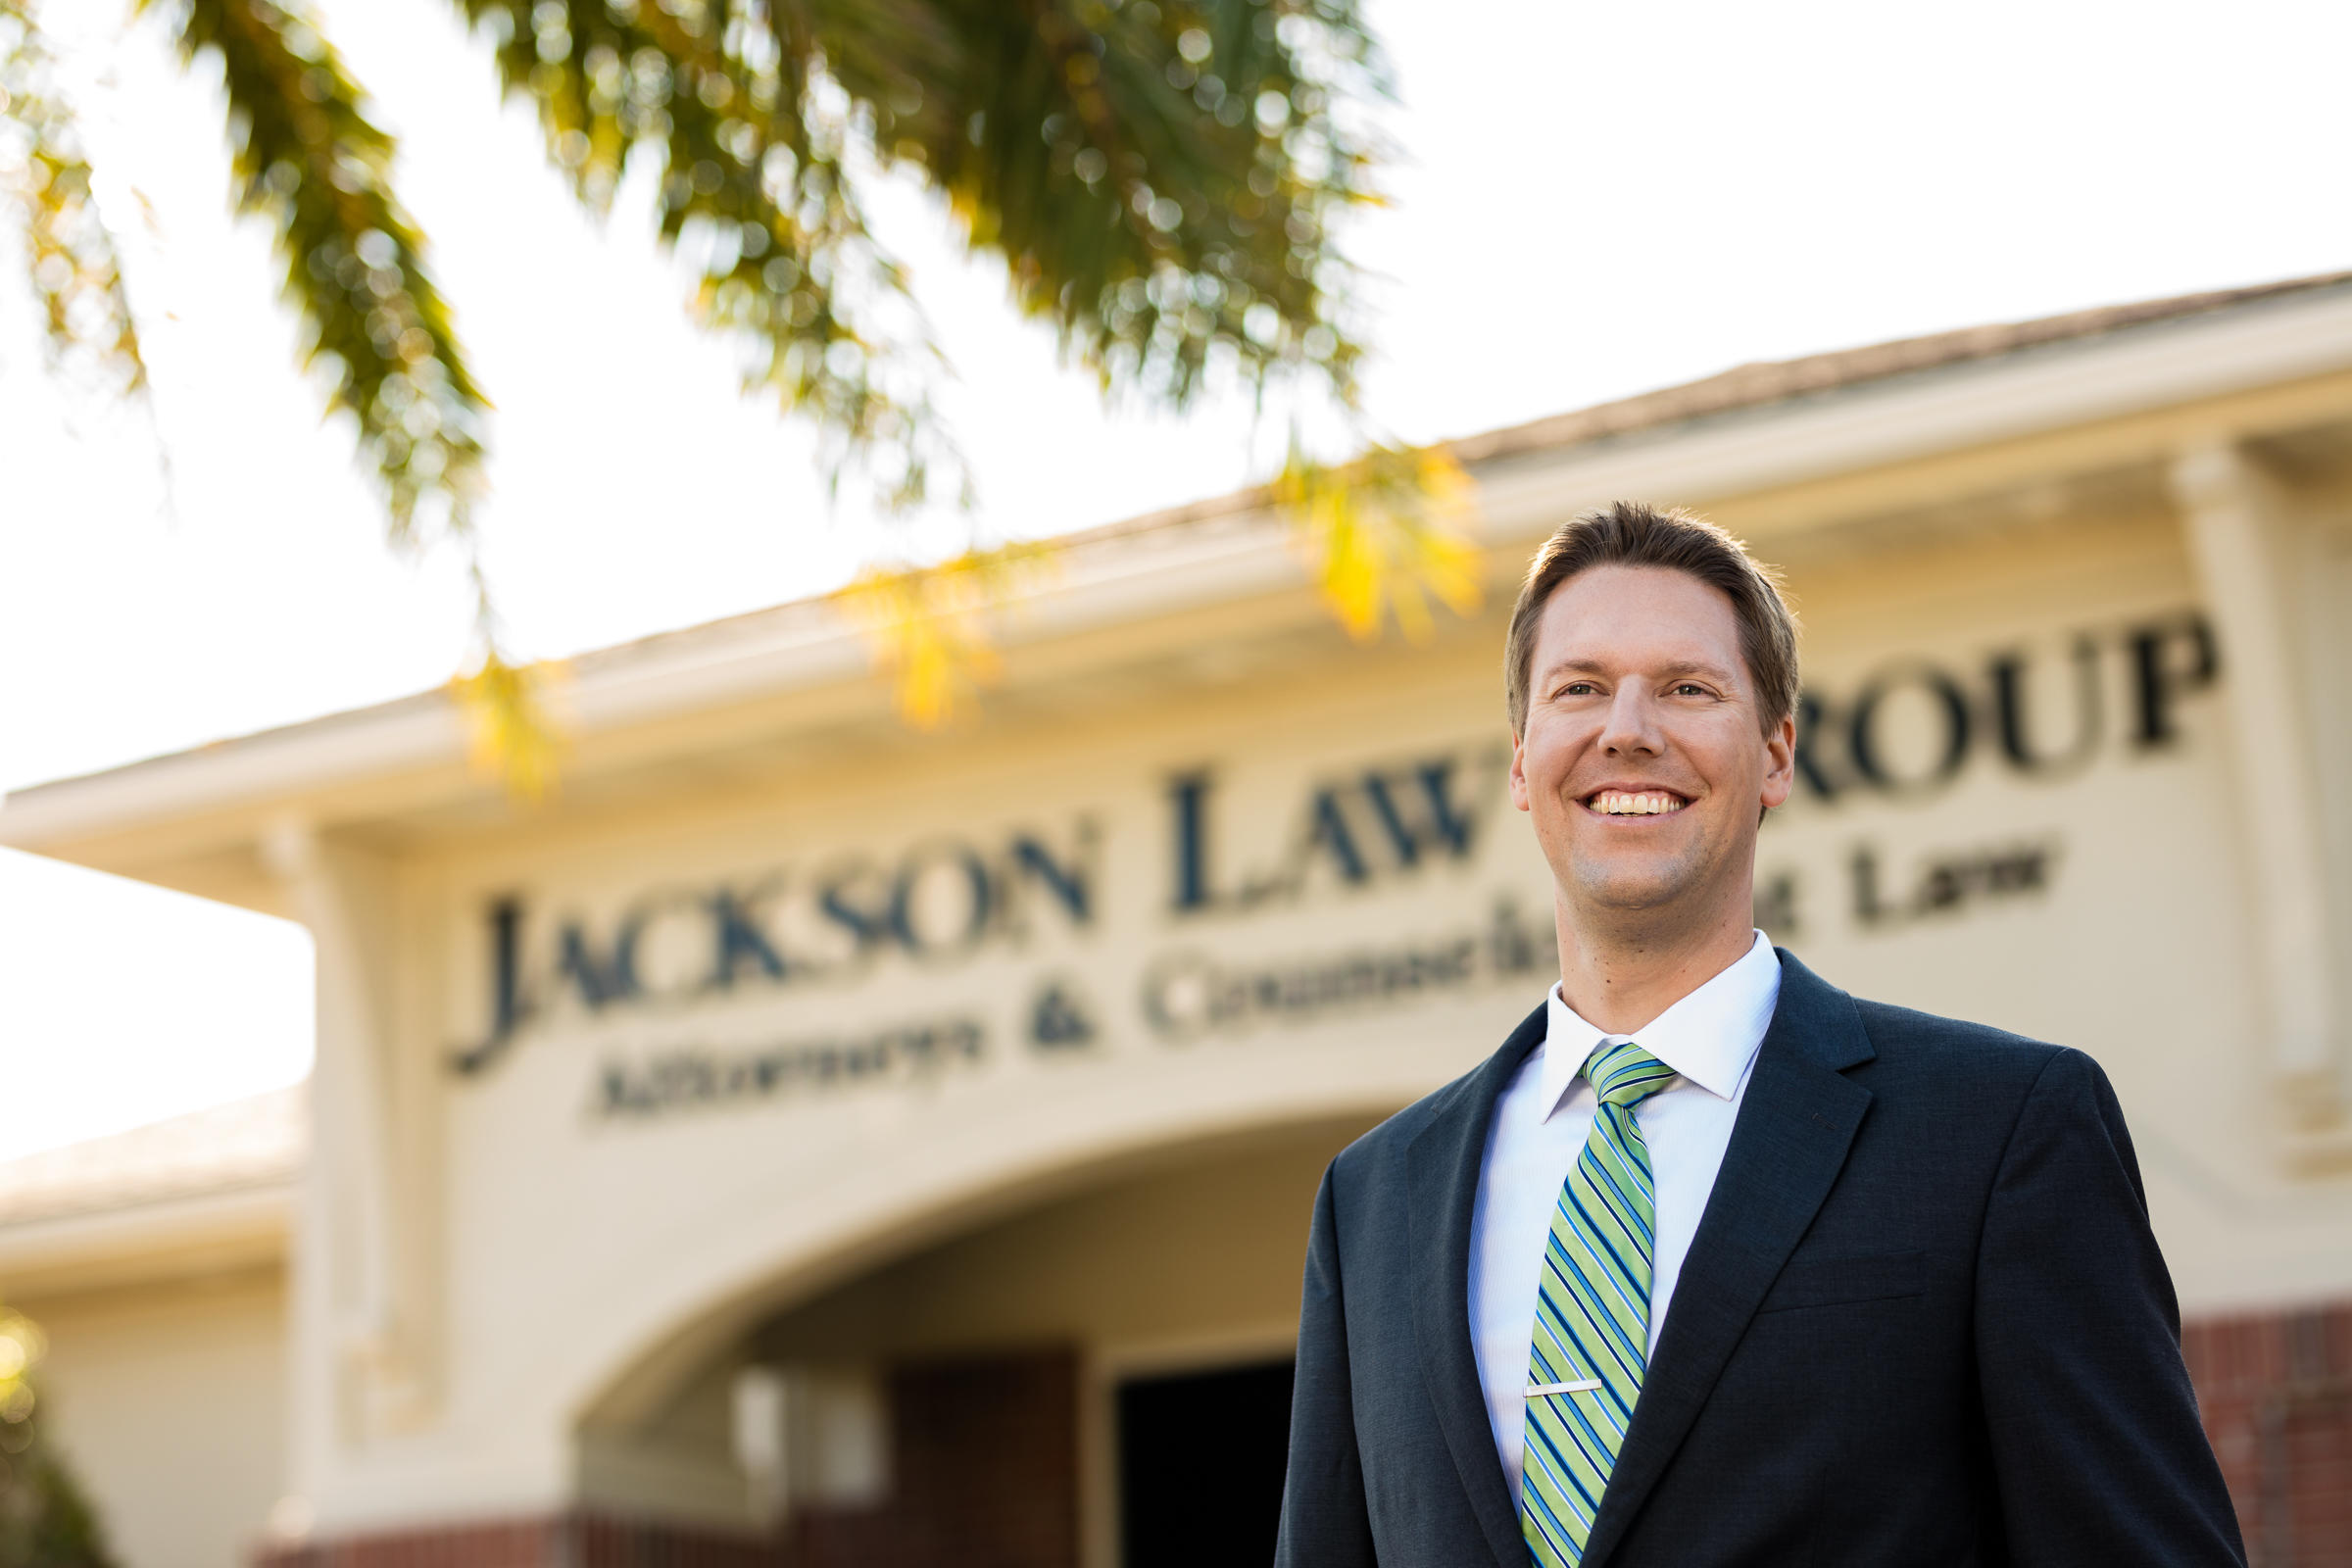 Jackson Law Group Photo